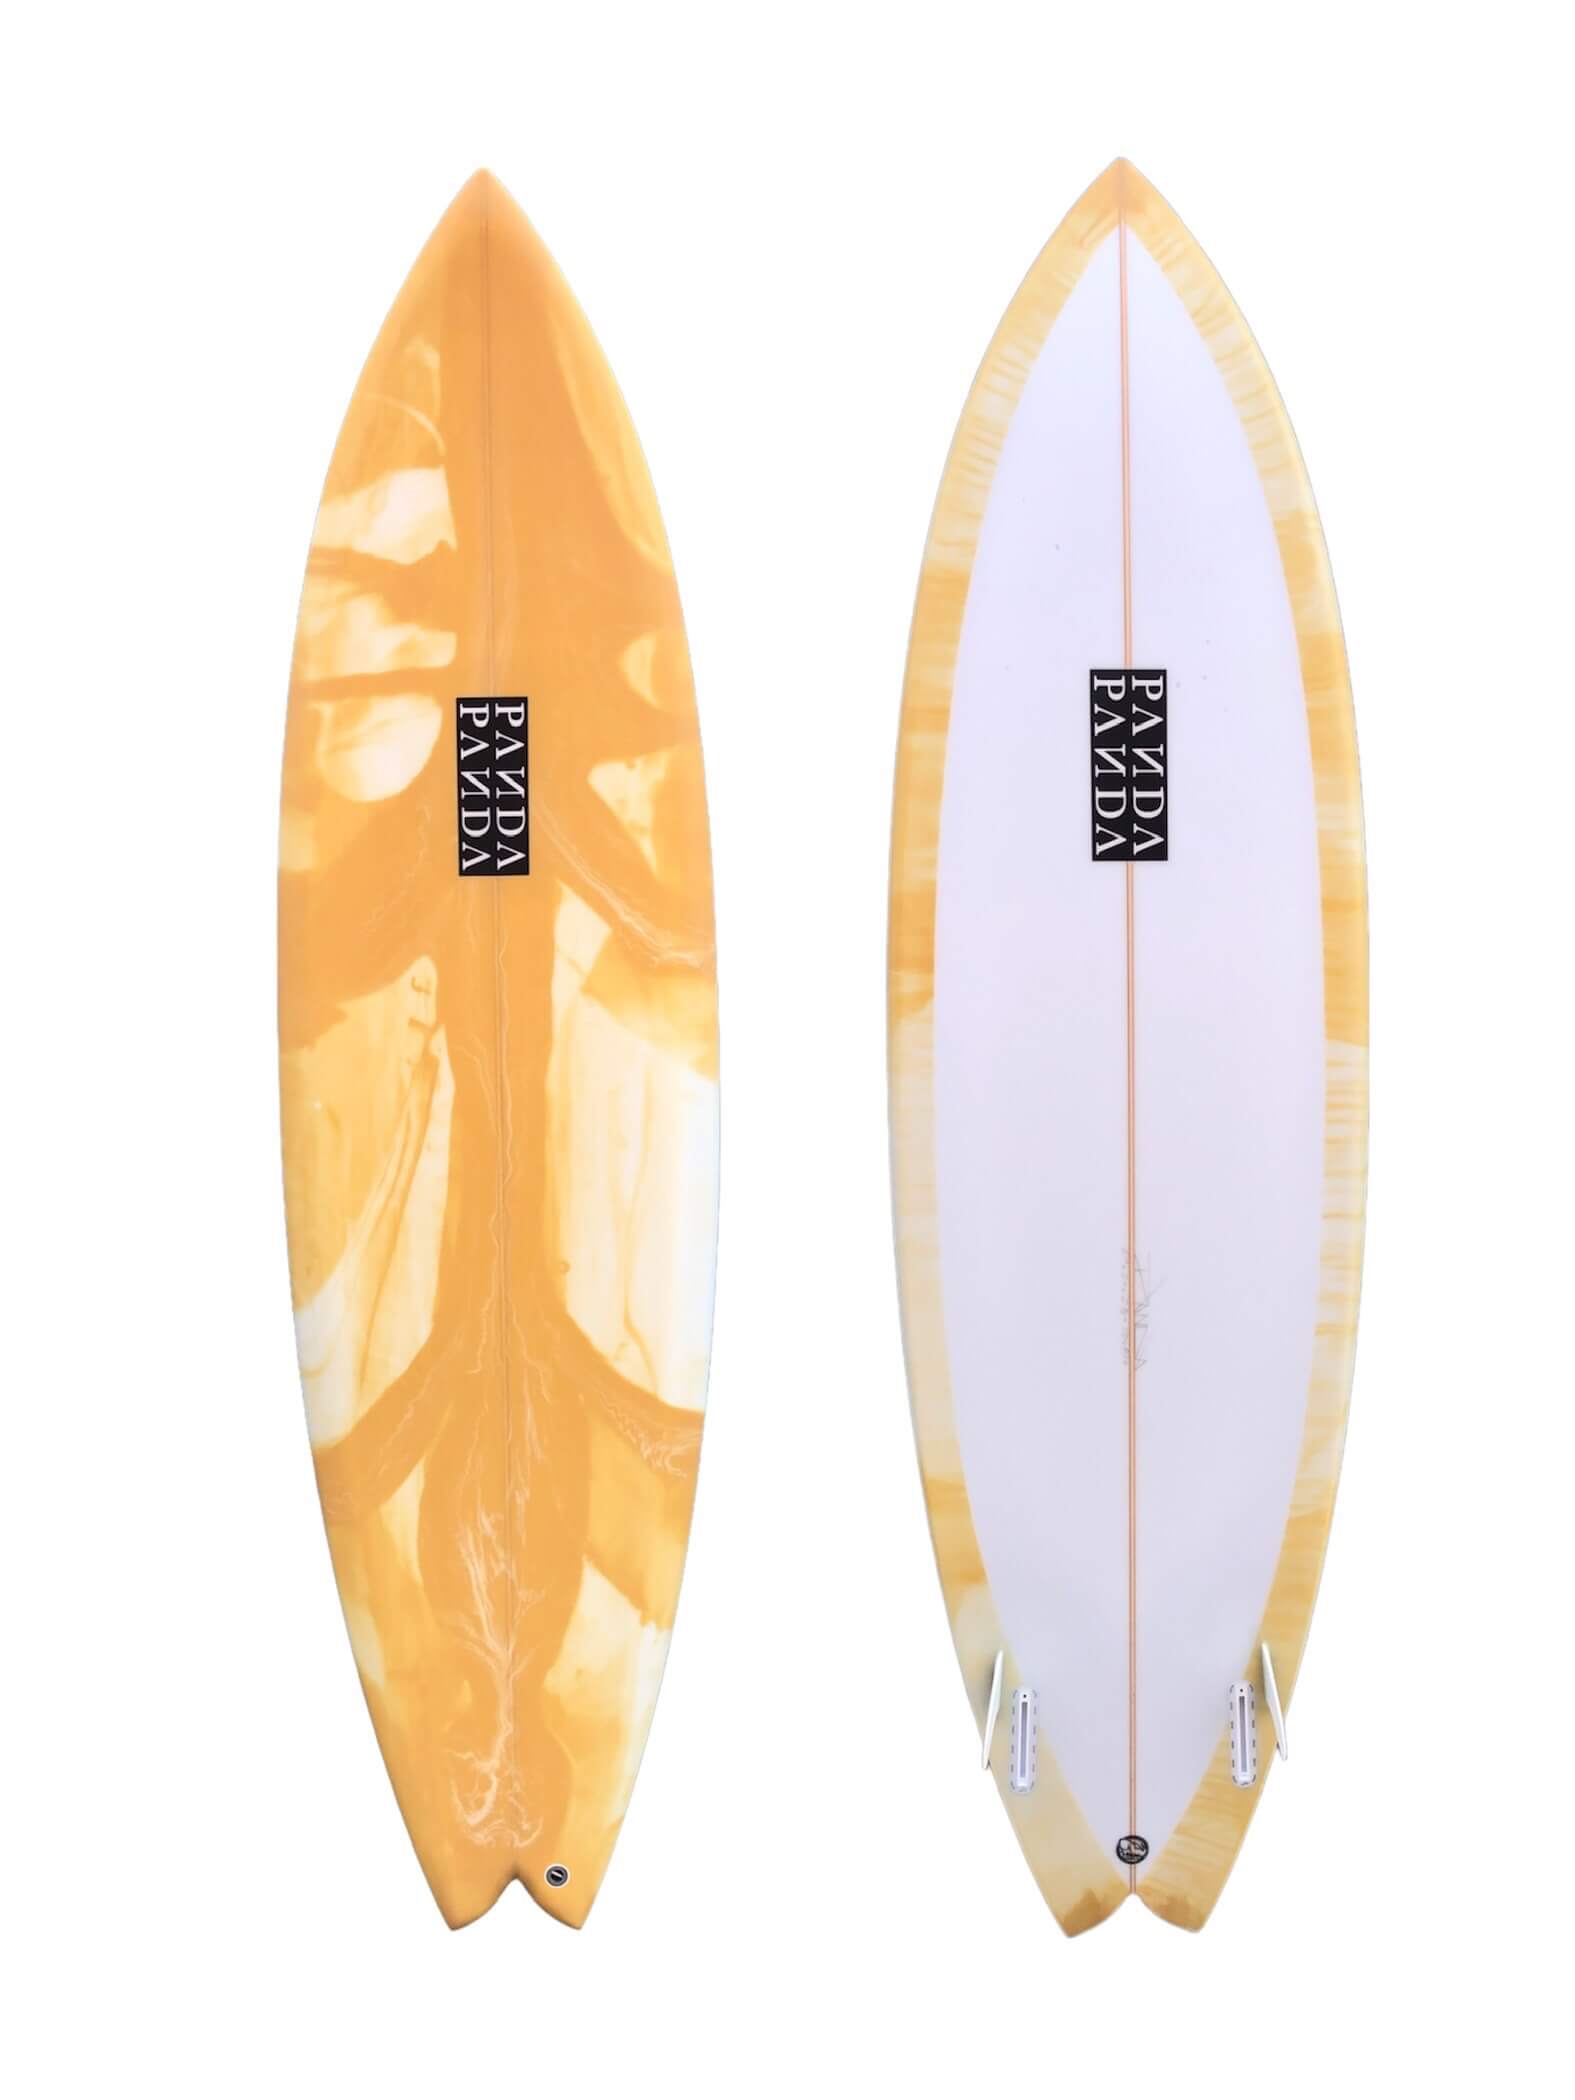 Panda surfboards Shiitake 6'10